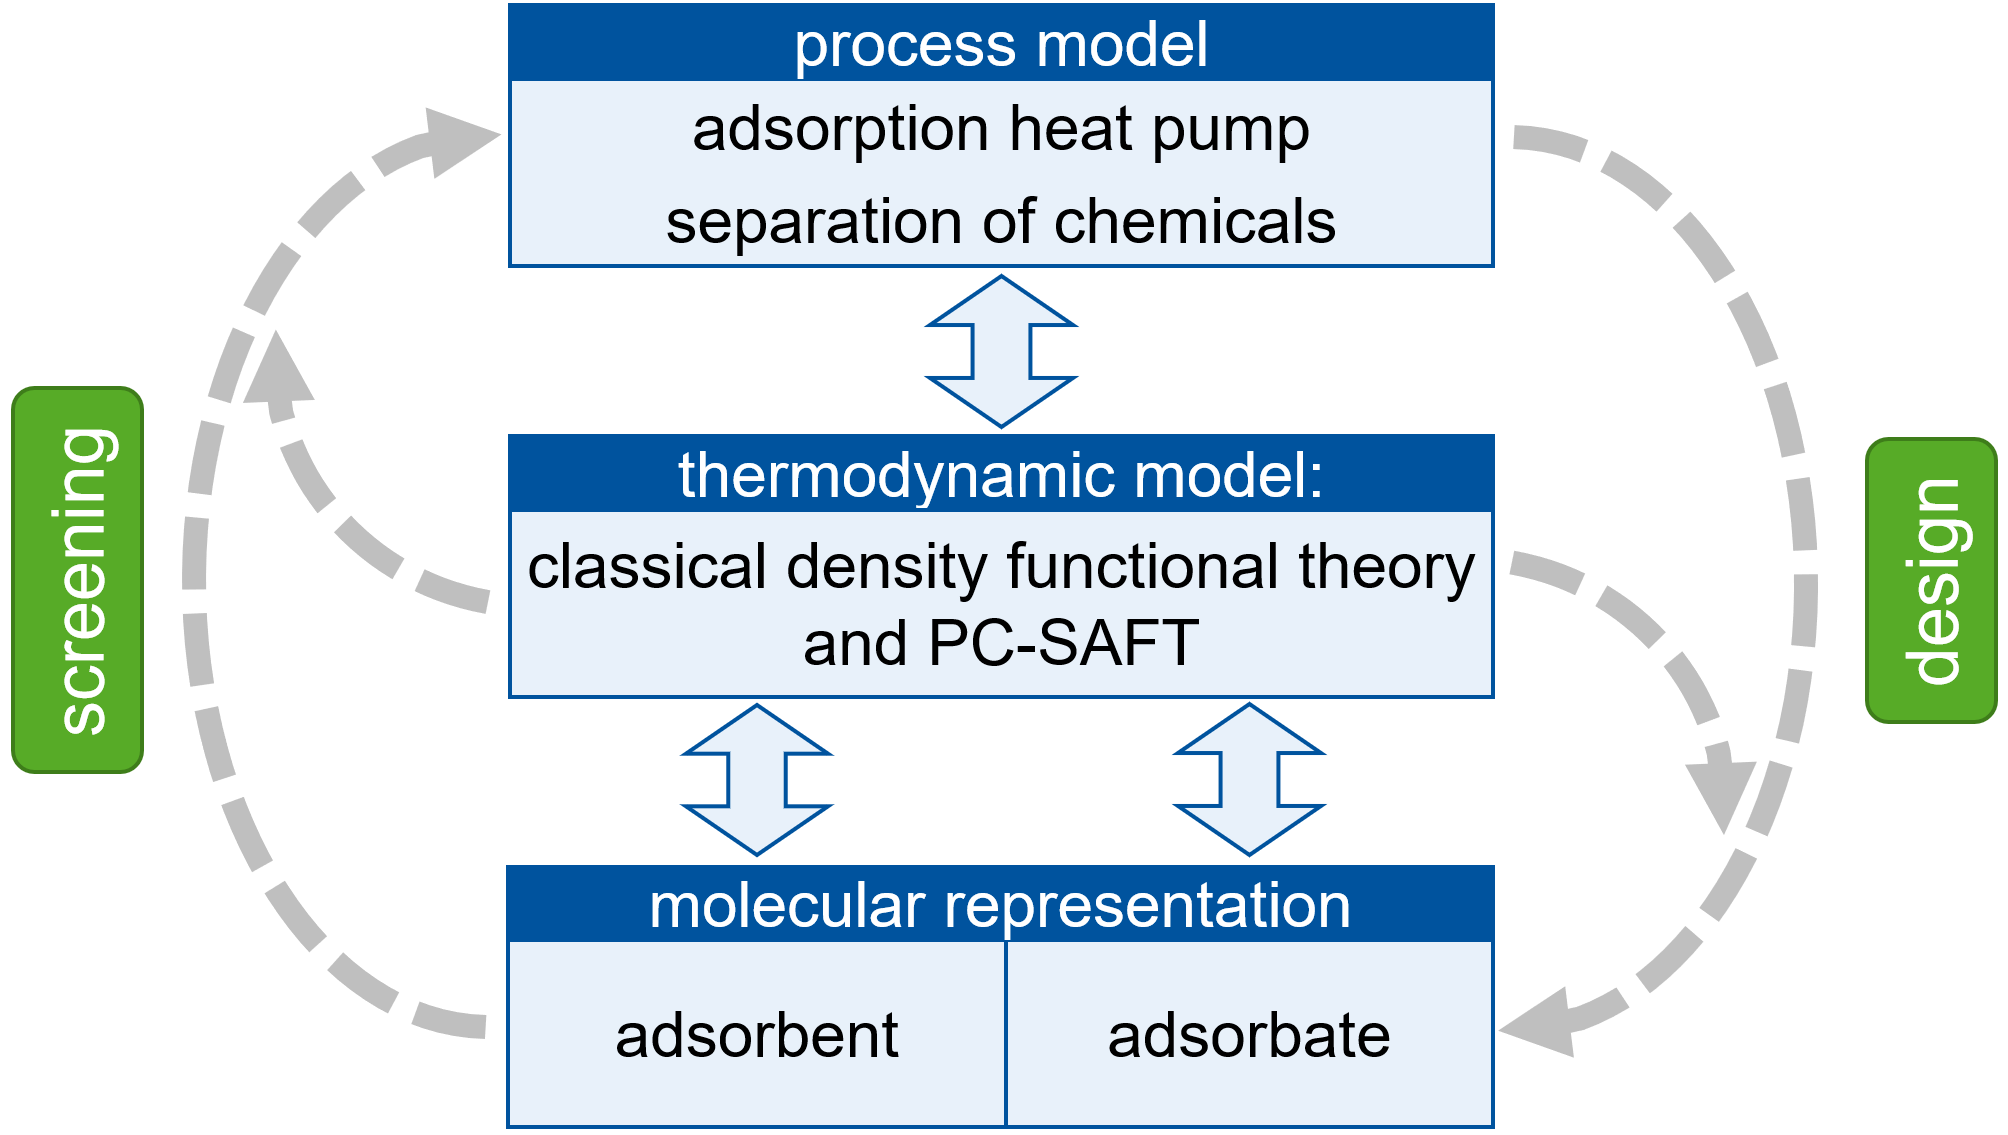 Framework for integrated design of adsorbents and adsorption-based processes